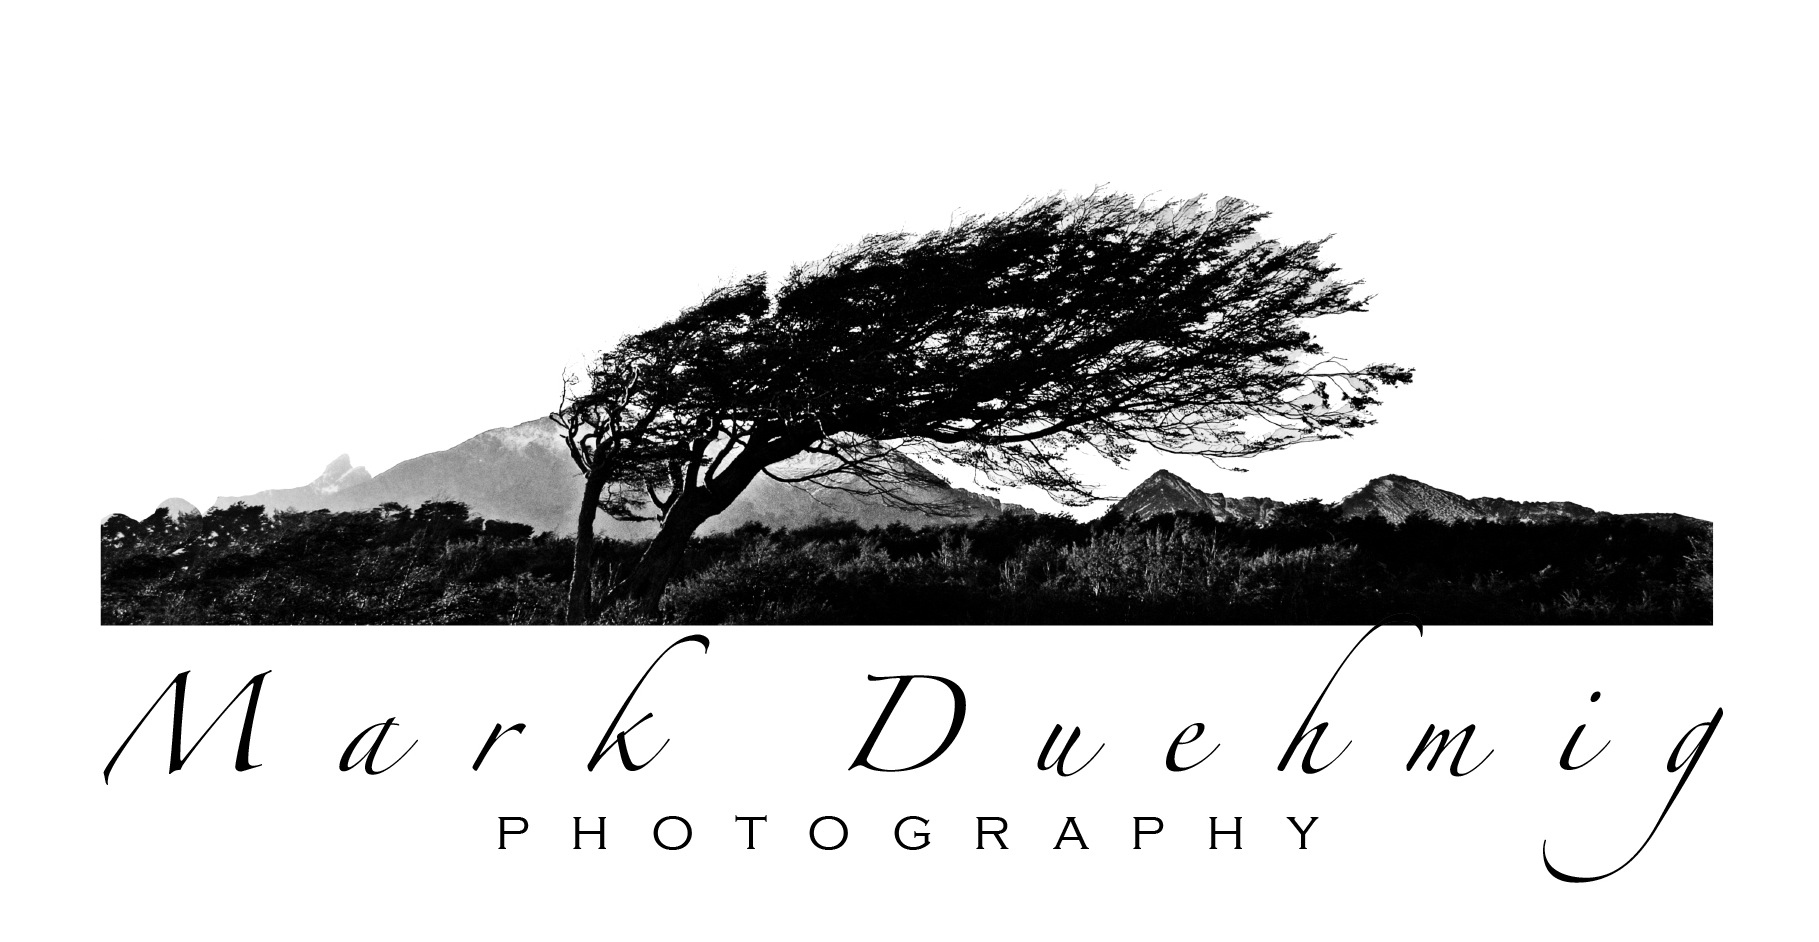 Mark Duehmig - Artist Website